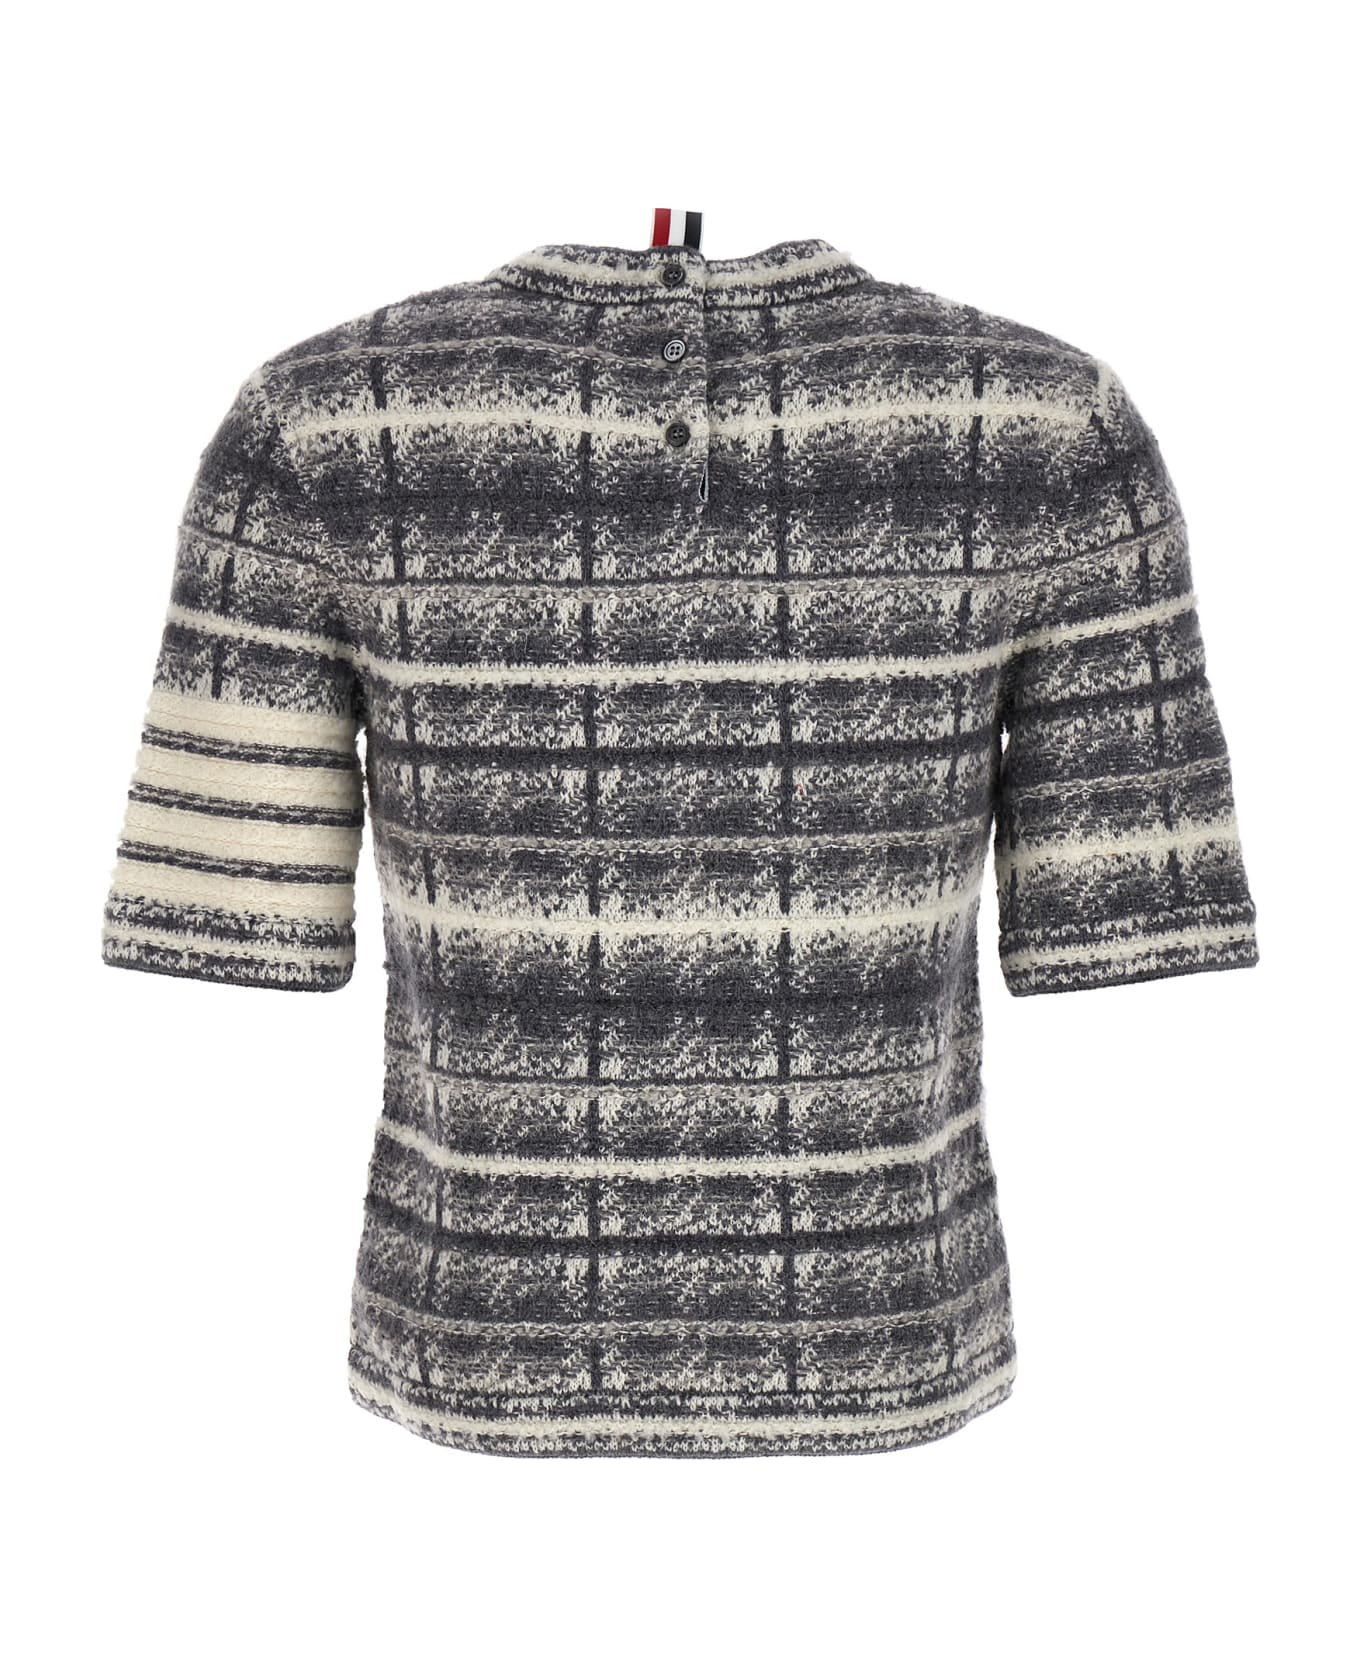 Thom Browne Tartan Sweater - Gray